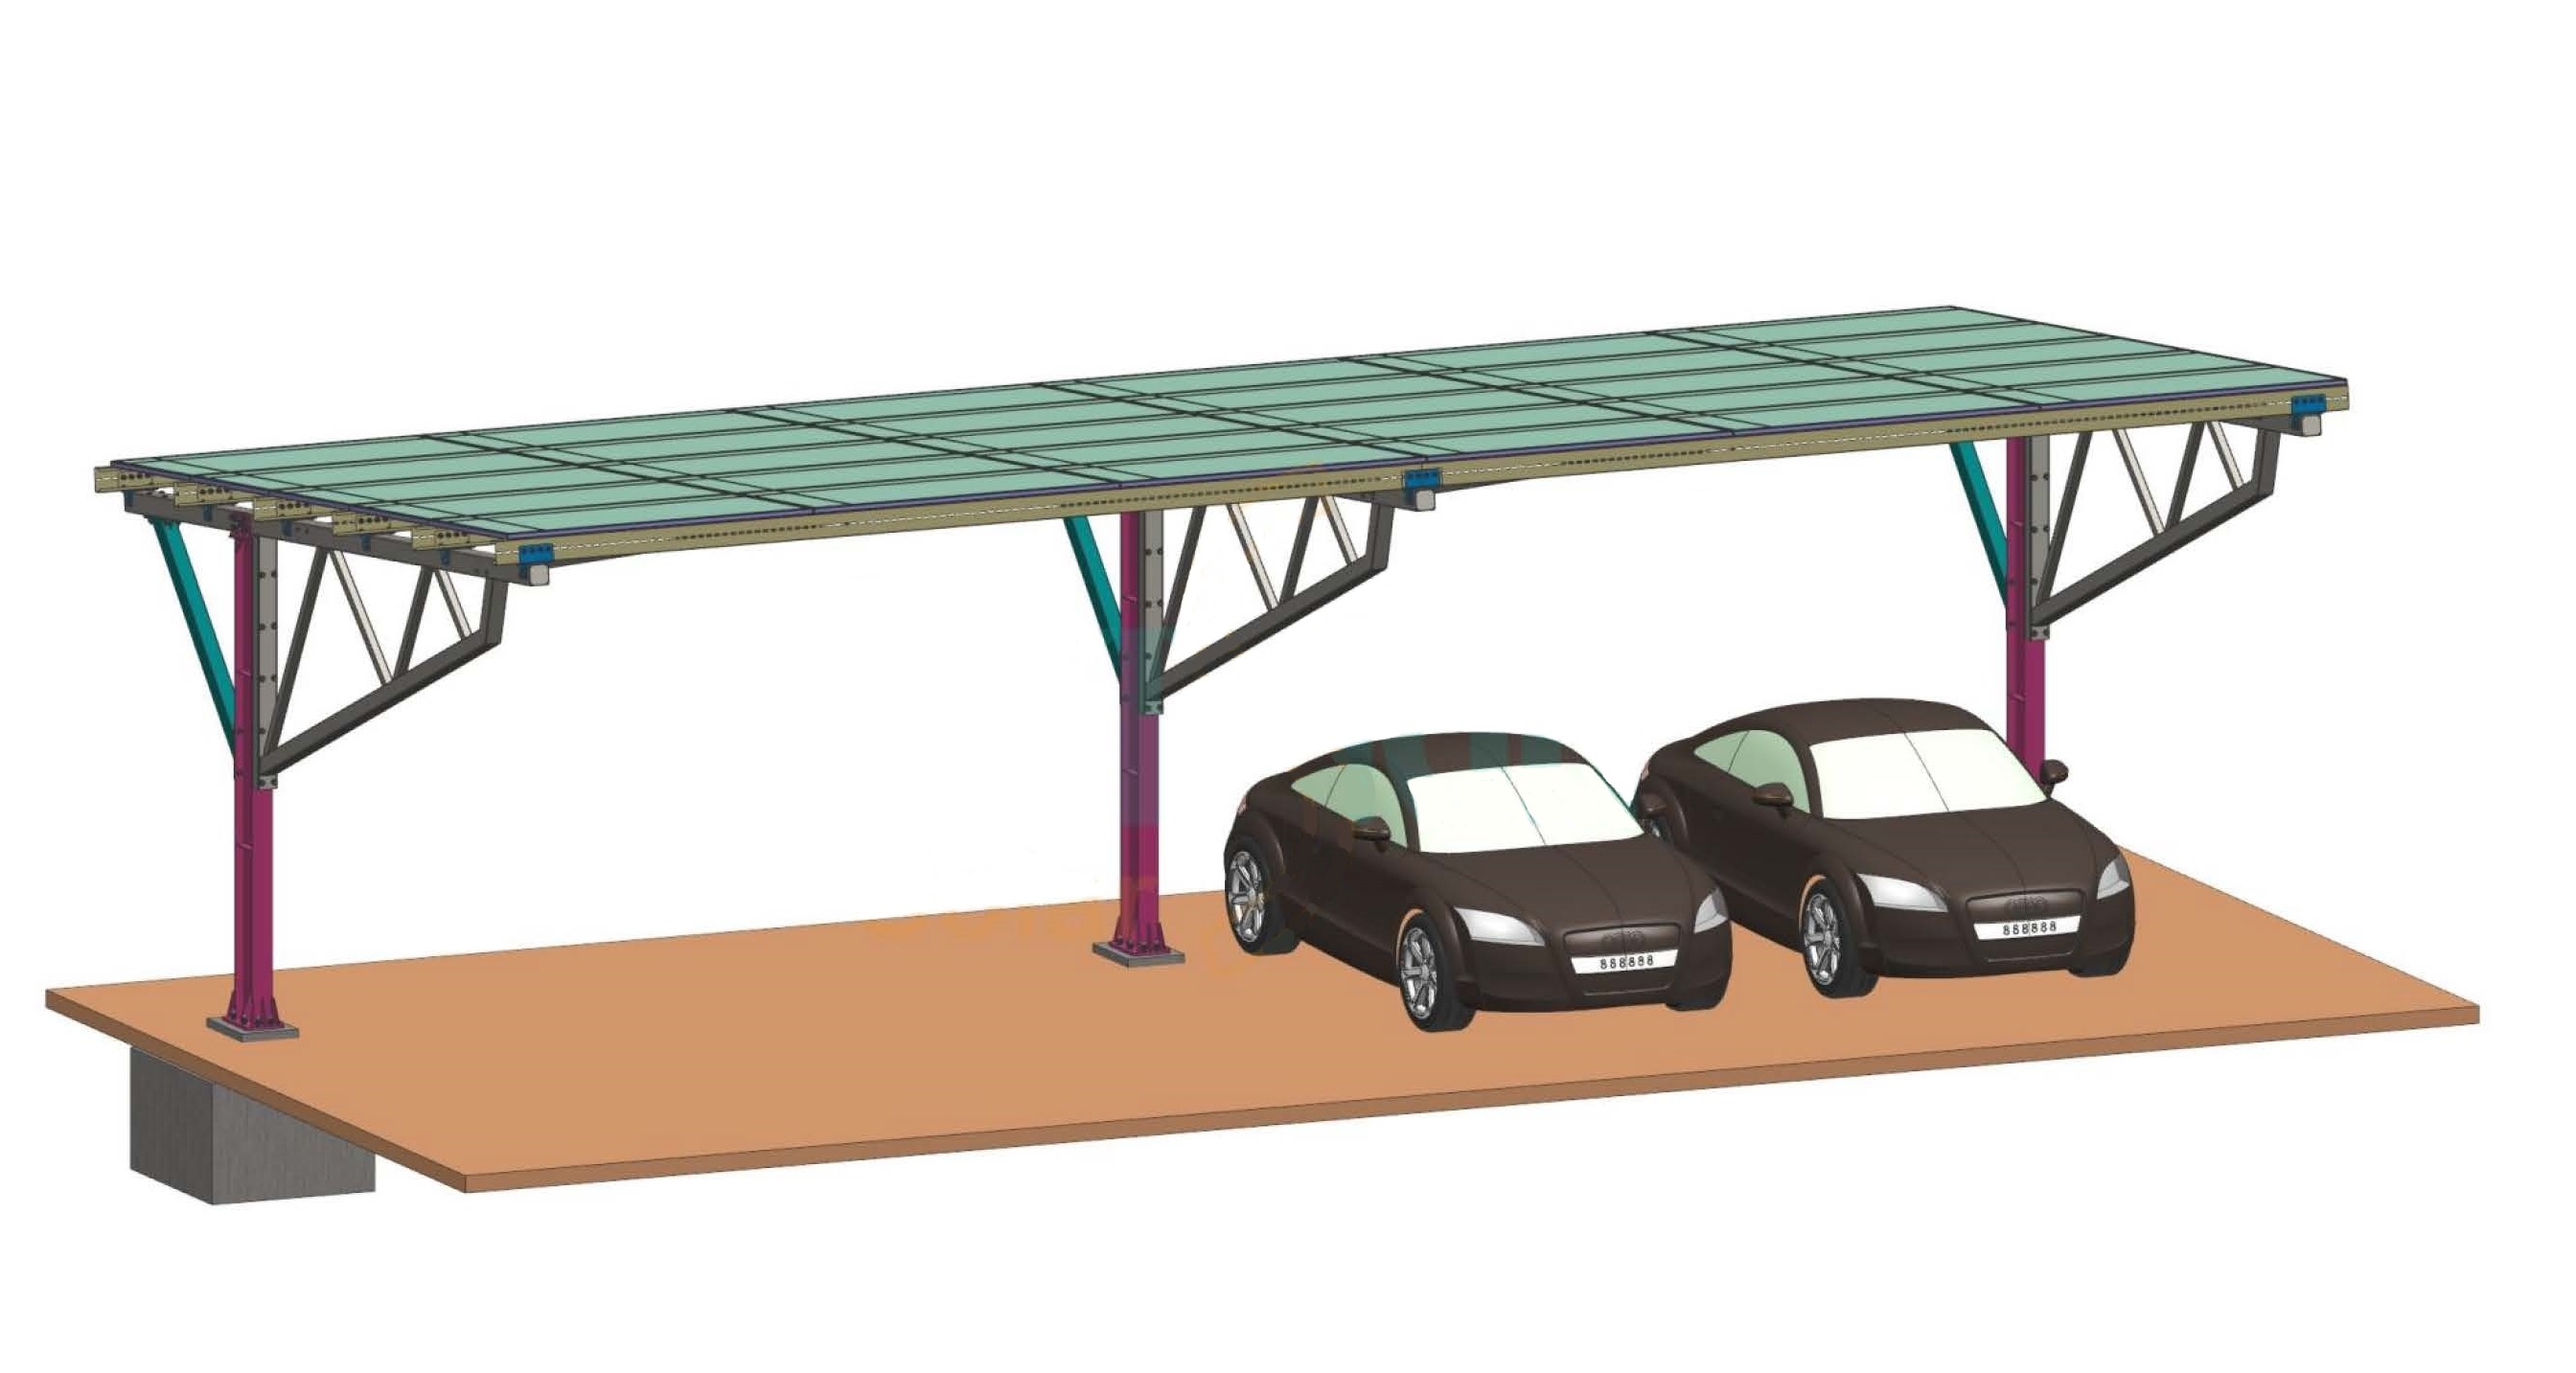 Mobler Konštrukcia na solárny/trapézový prístrešok pre autá Carport 2: Pro 18 vozidel